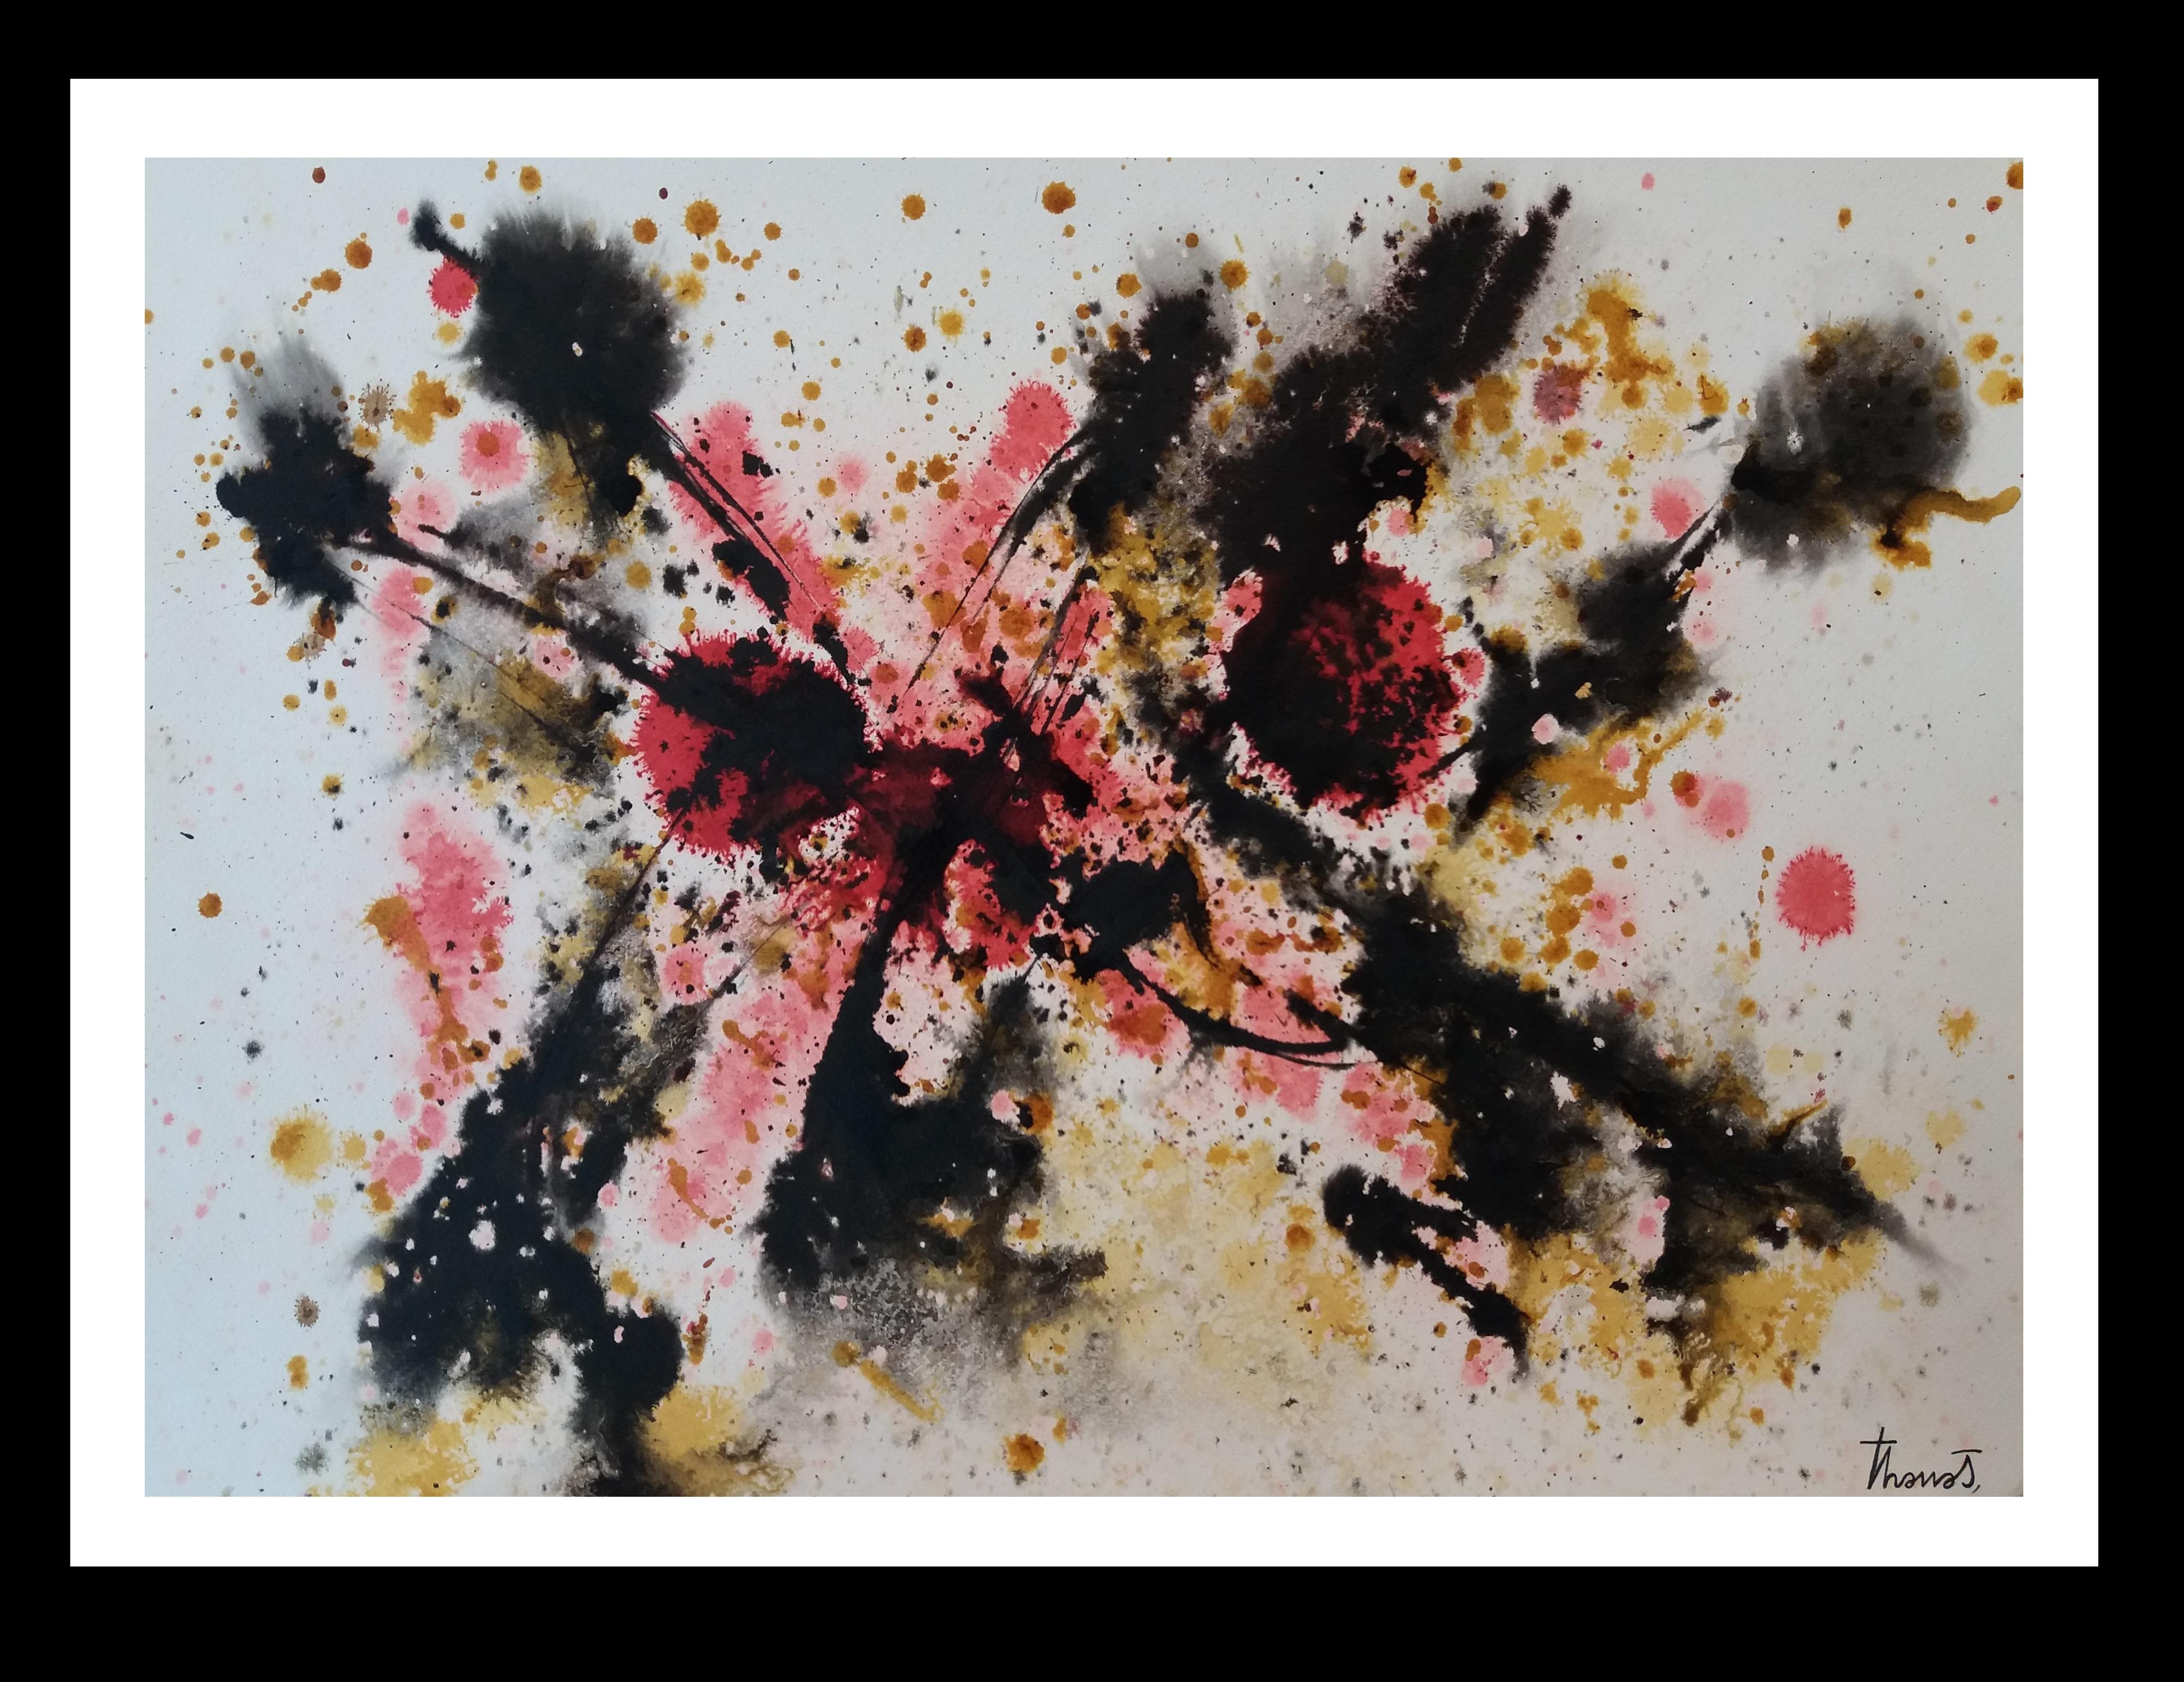 Josep THARRATS Abstract Painting - Tharrats  7 Red  Black  Constellation 7 original acrylic paper painting